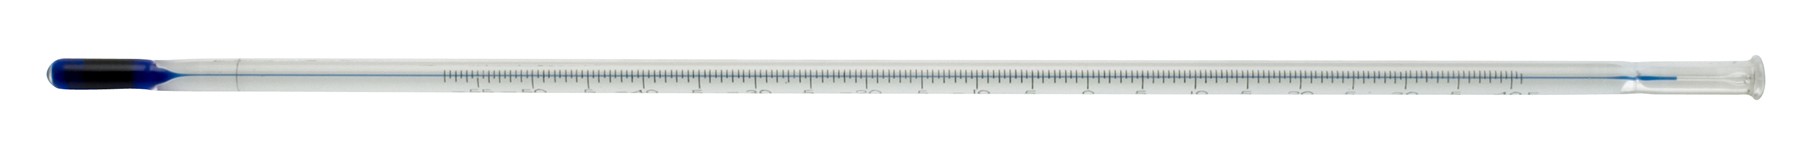 SP Bel-Art, H-B DURAC Plus ASTM Like Liquid-In-Glass Laboratory Thermometer; 1F / Partial Immersion 76mm, 0 to 302F, Organic Liquid Fill